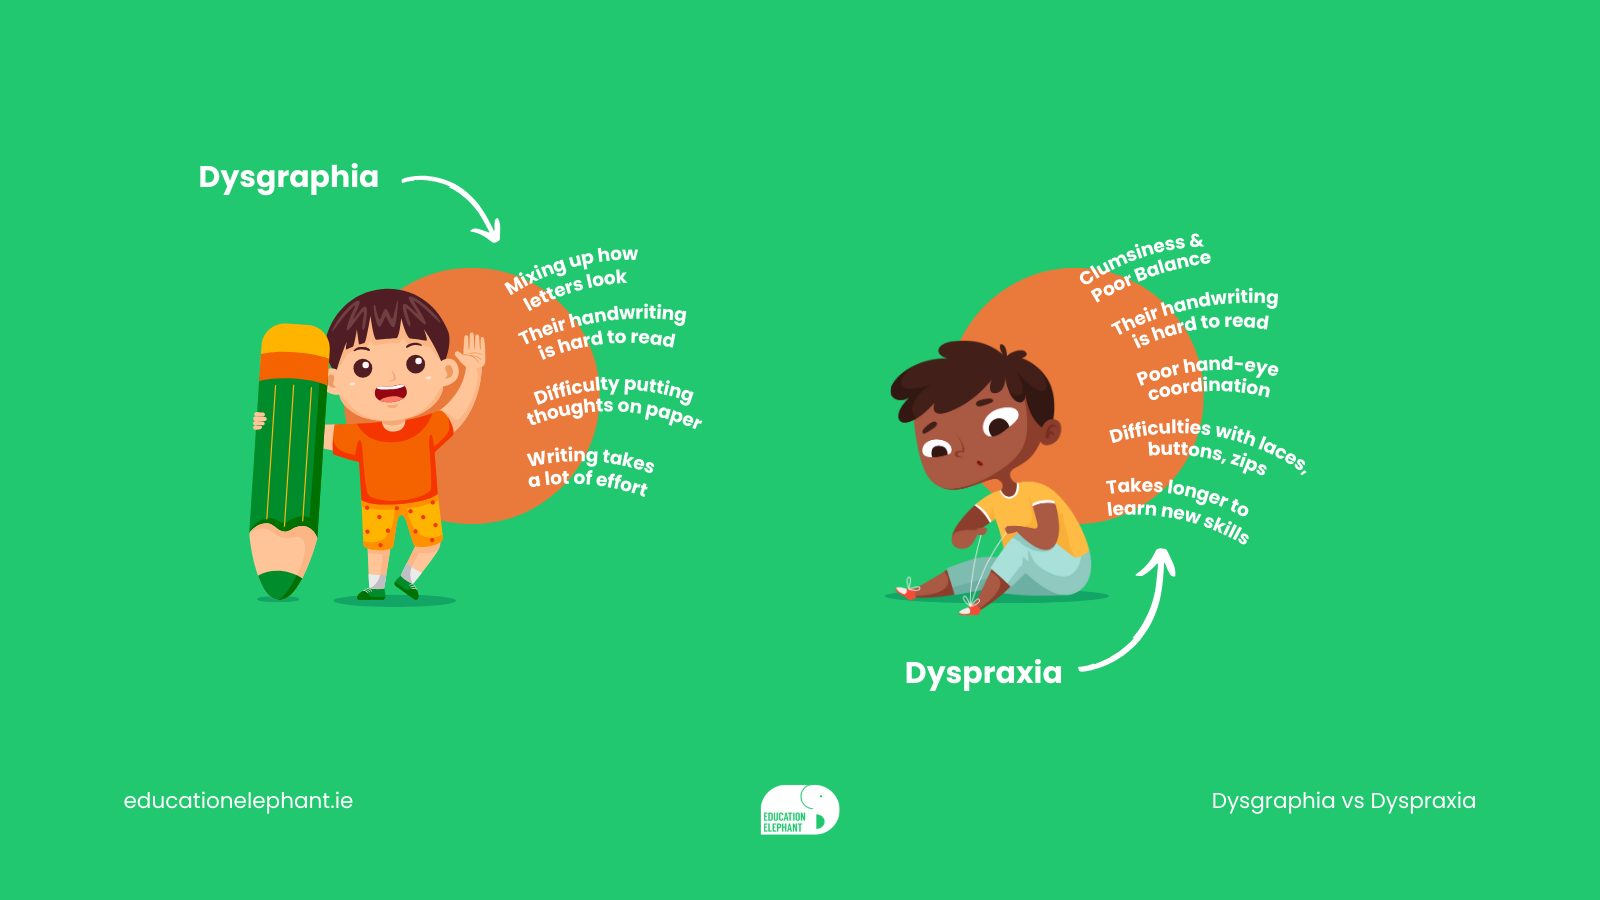 Twitter Dysgraphia vs Dyspraxia